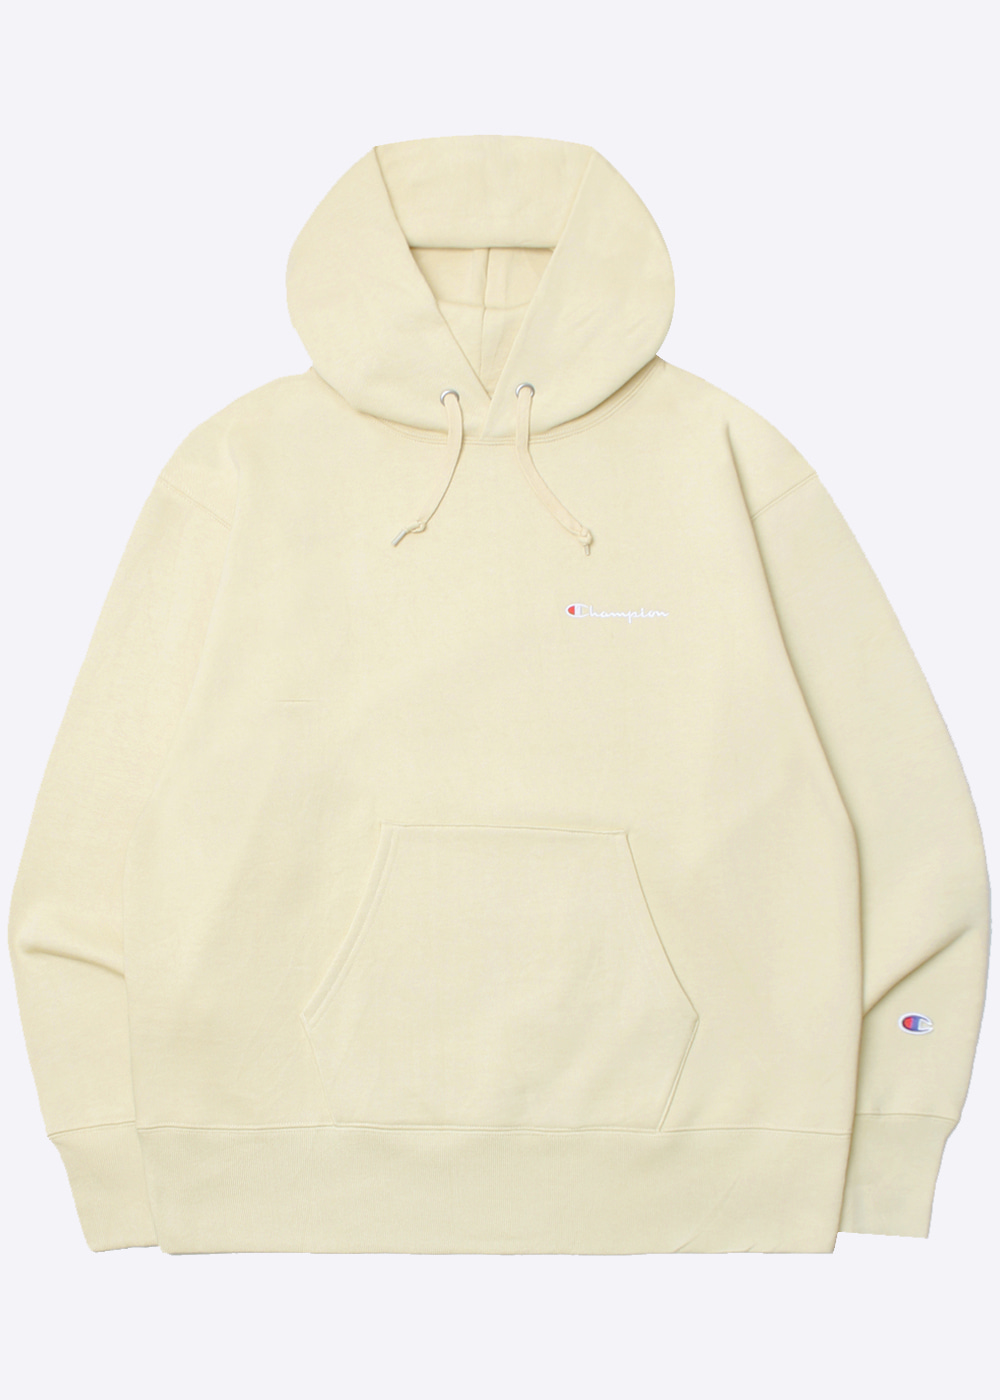 CHAMPION’over fit’ japan linense hood sweatshirt